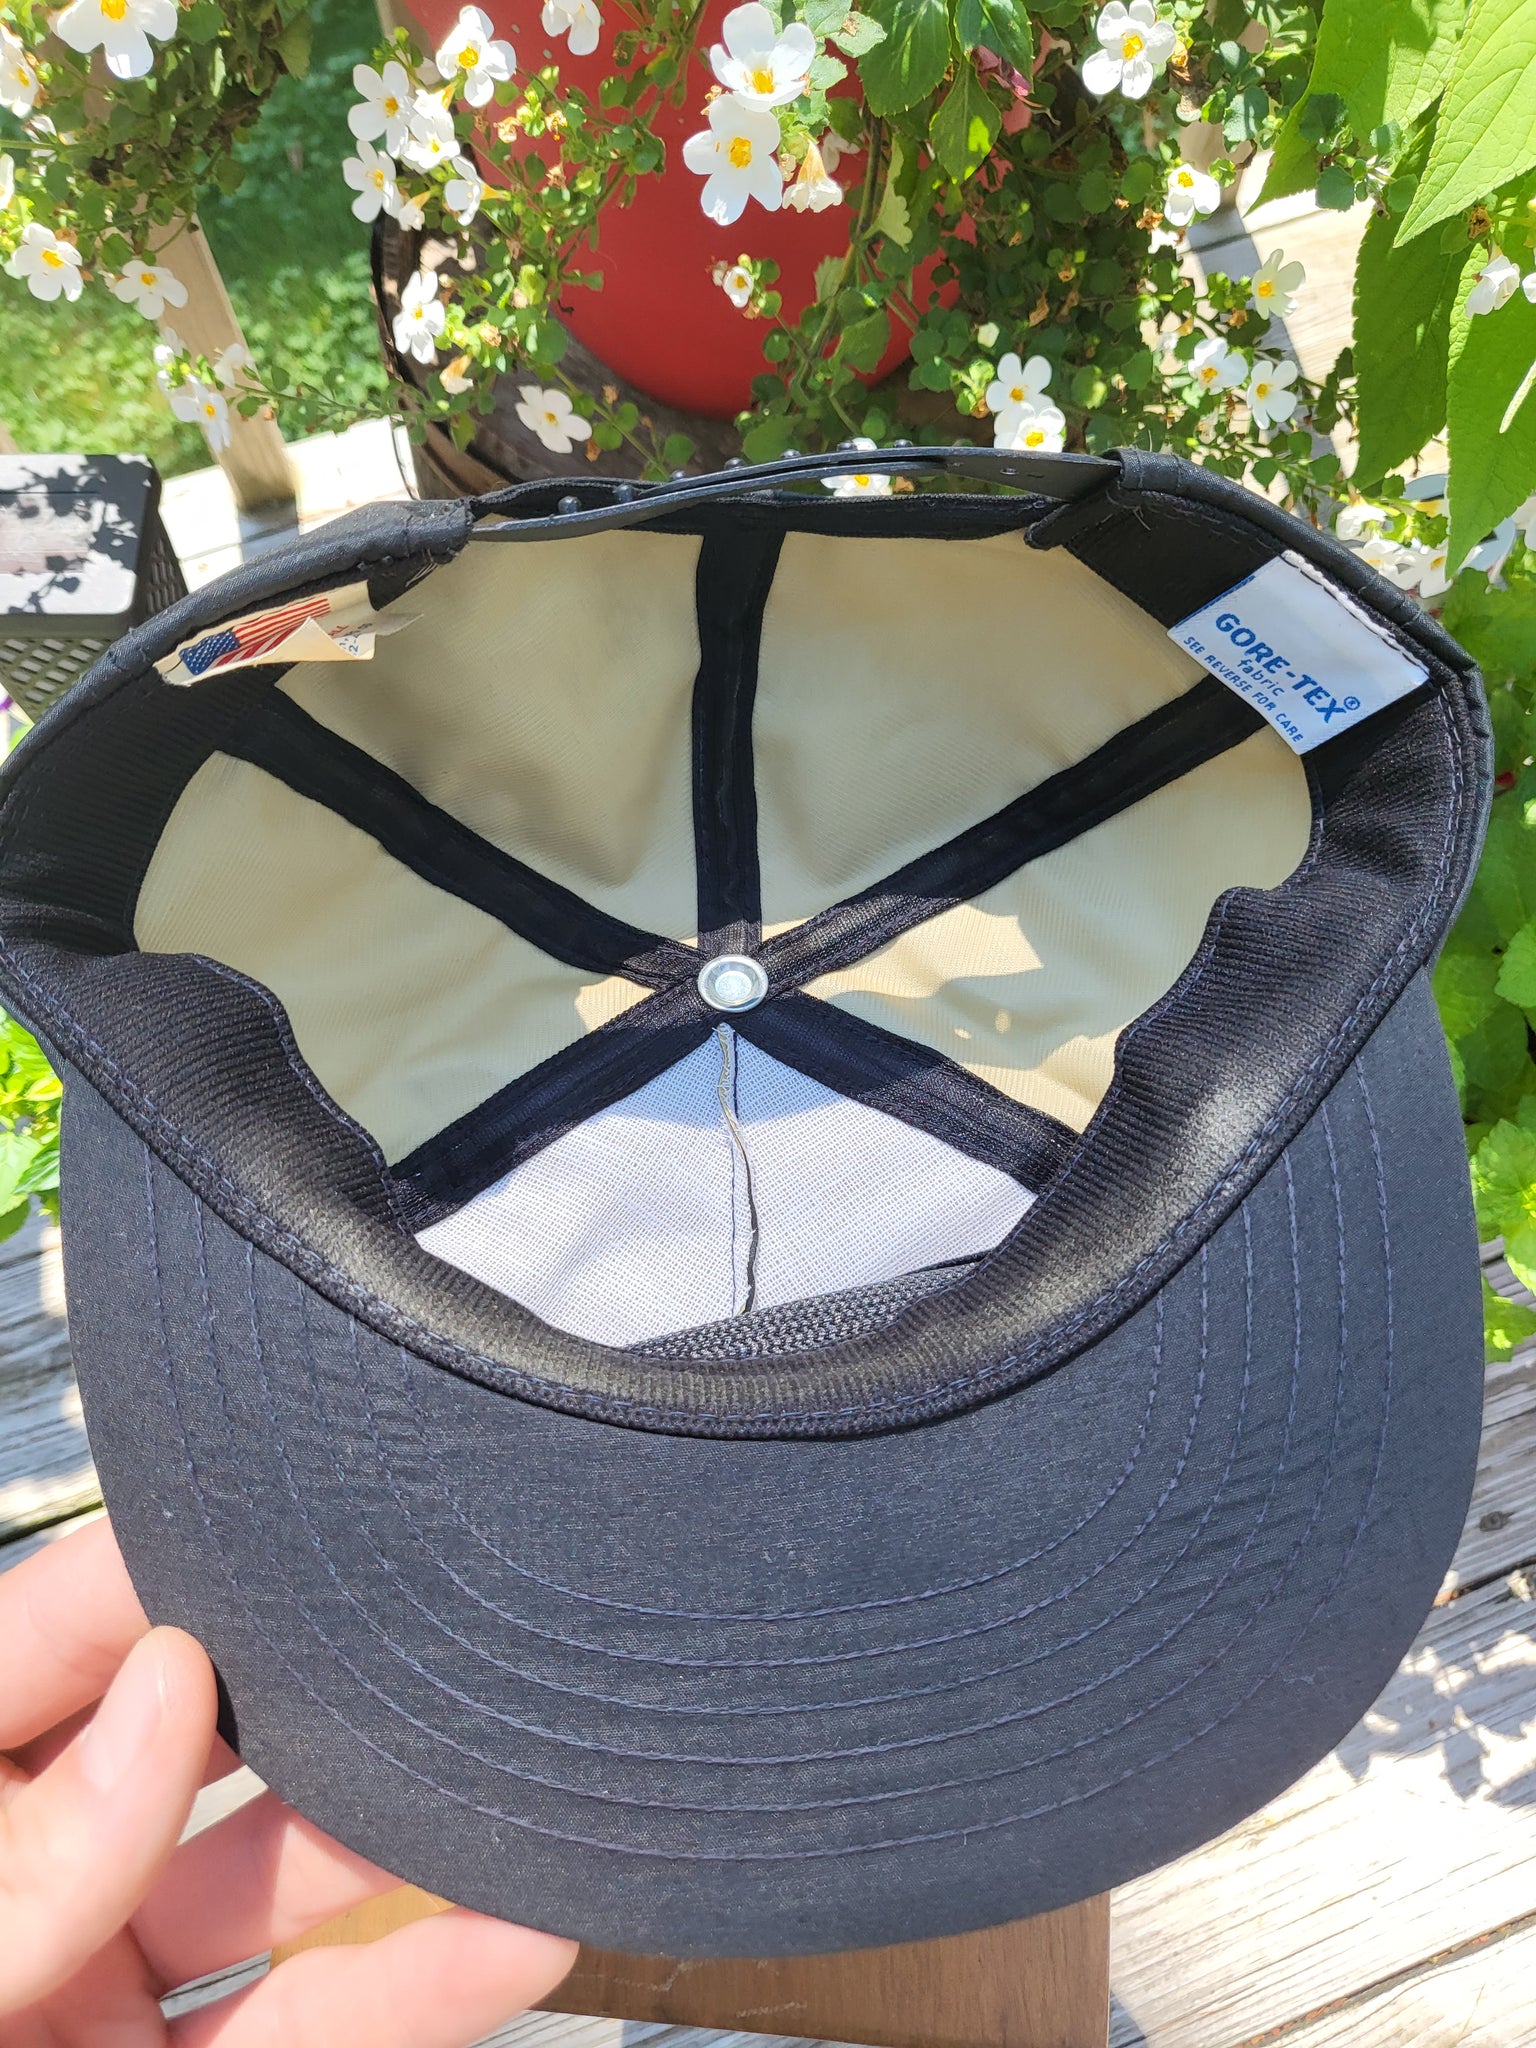 Vintage Rare Berkley Lightning Fishing Rod Gor-Tex Hat – Twisted